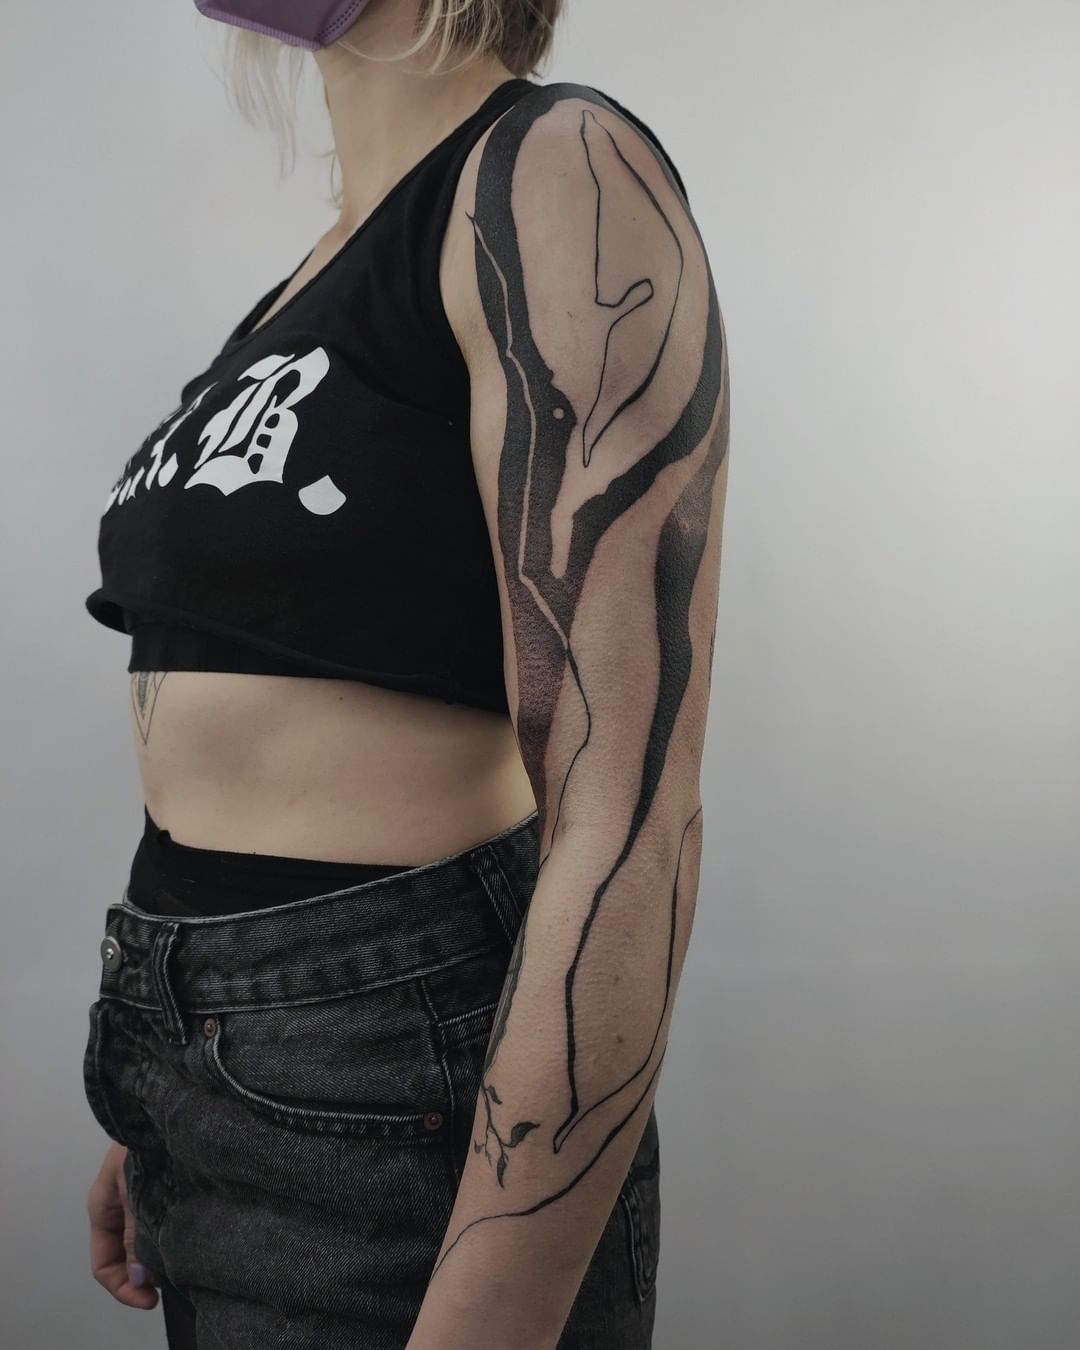 abstract-tattoo-iza-blk-front-arm